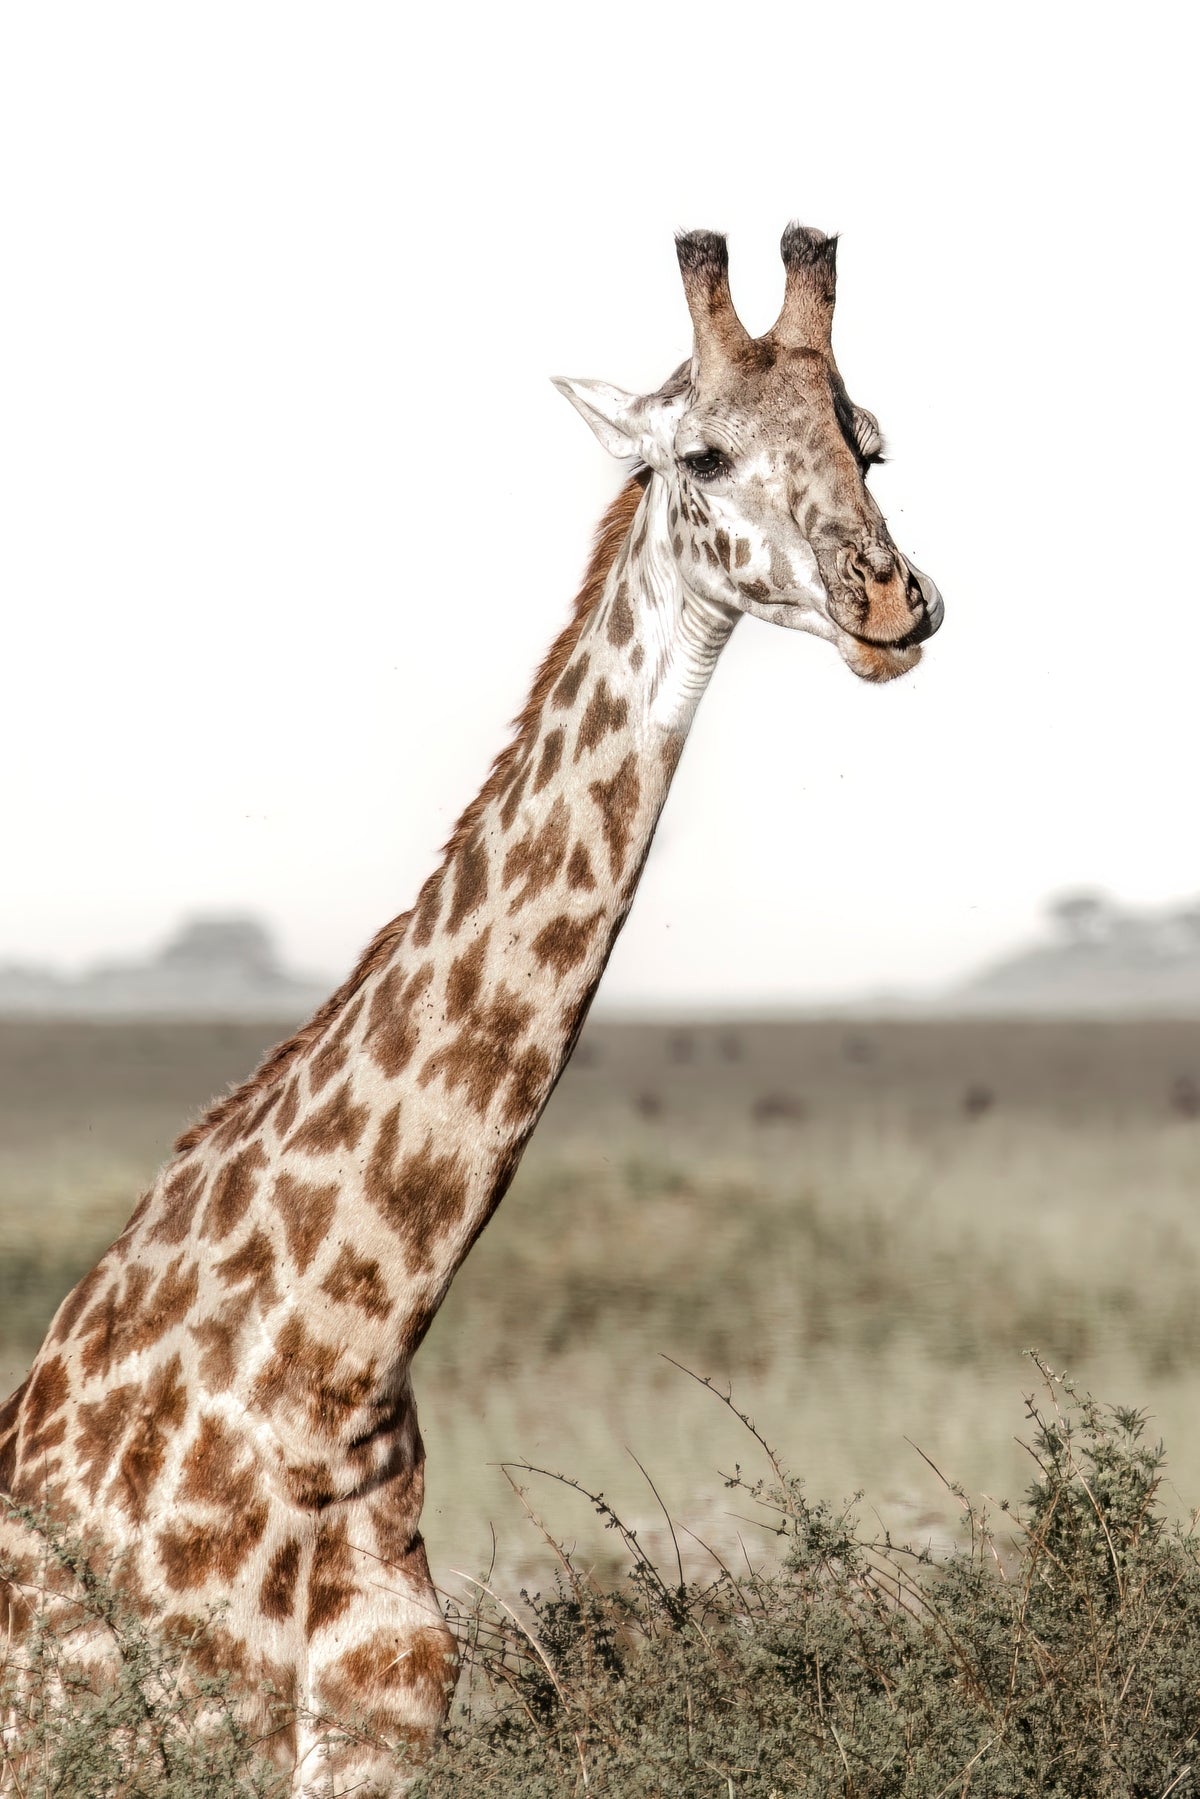 Gentle Giant of the Serengeti